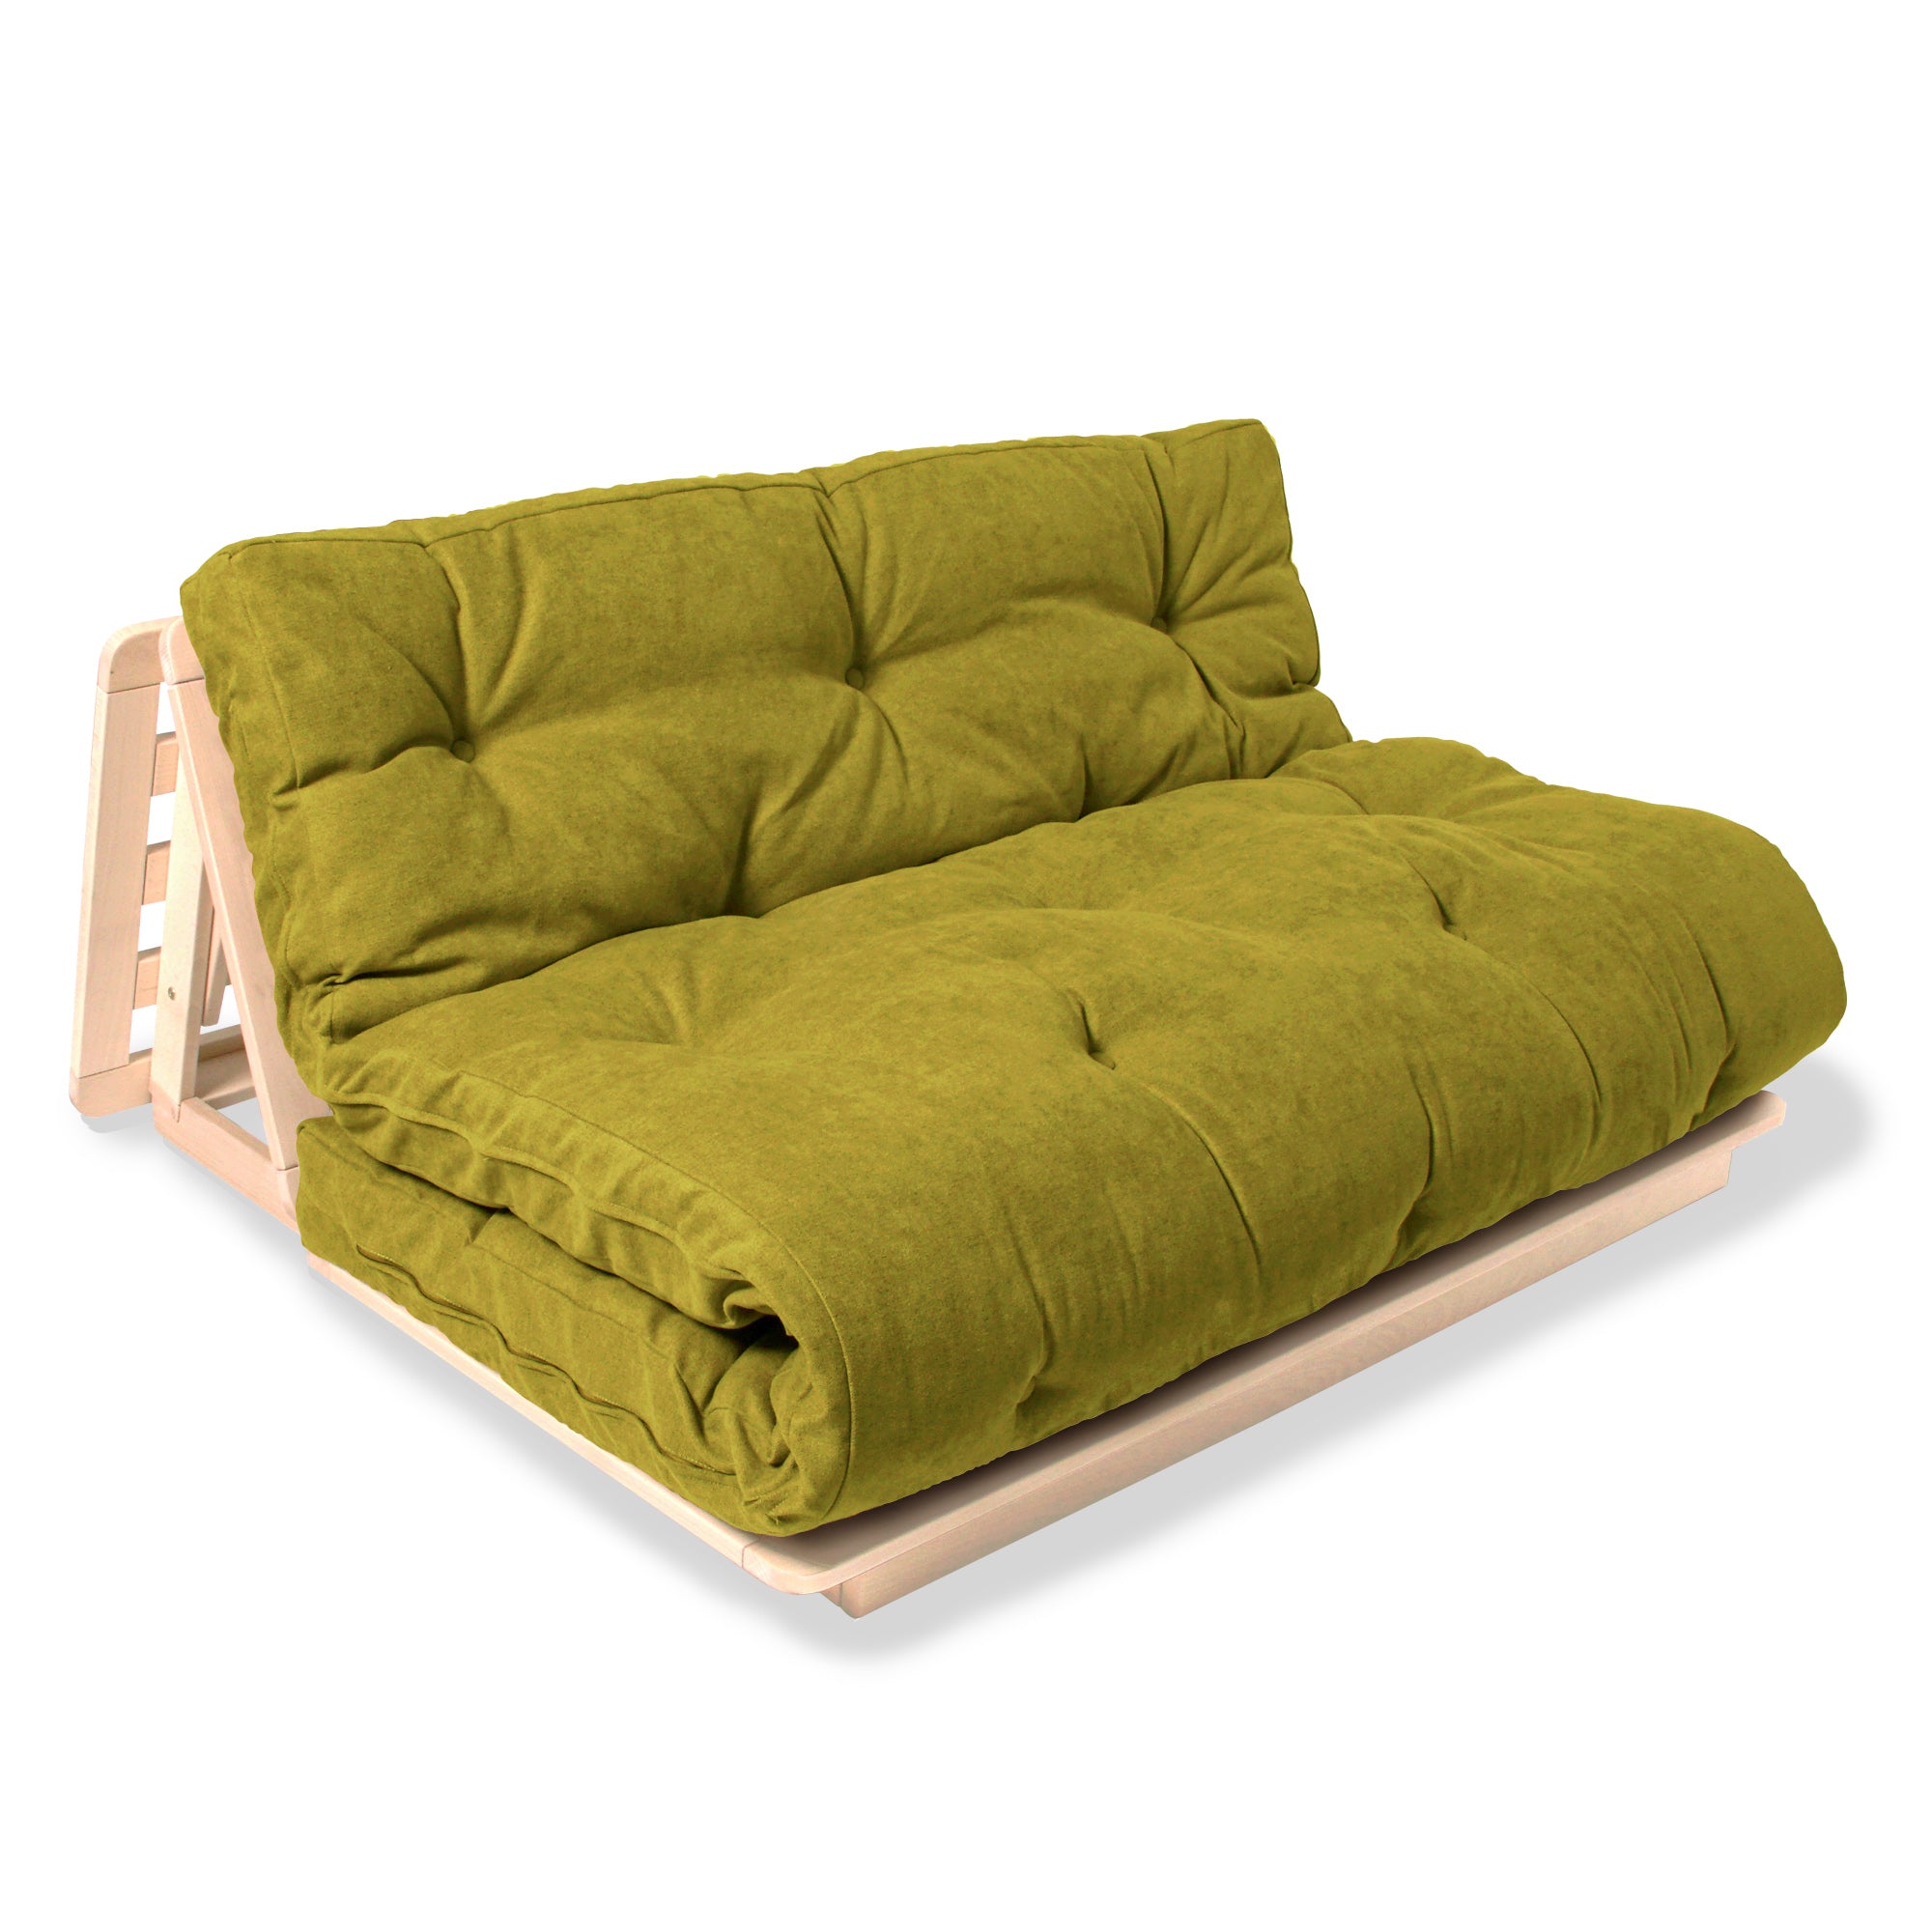 LAYTI-140 Futon Chair, Beech Wood, Natural Colour-green fabric